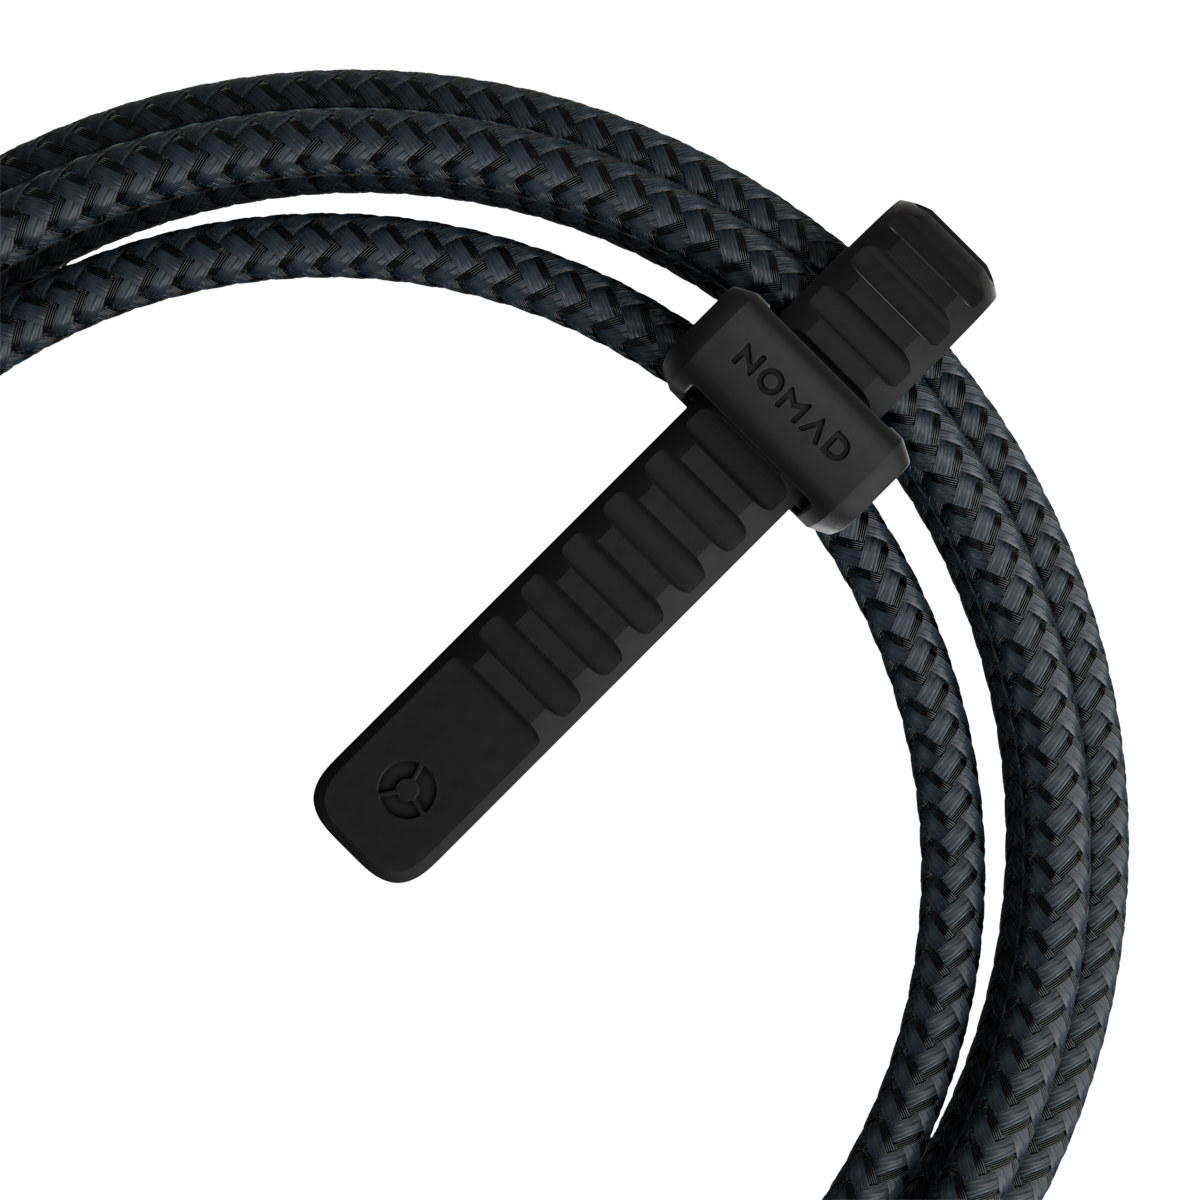 Kevlar Universal Cable USB-C 1.5m, Black